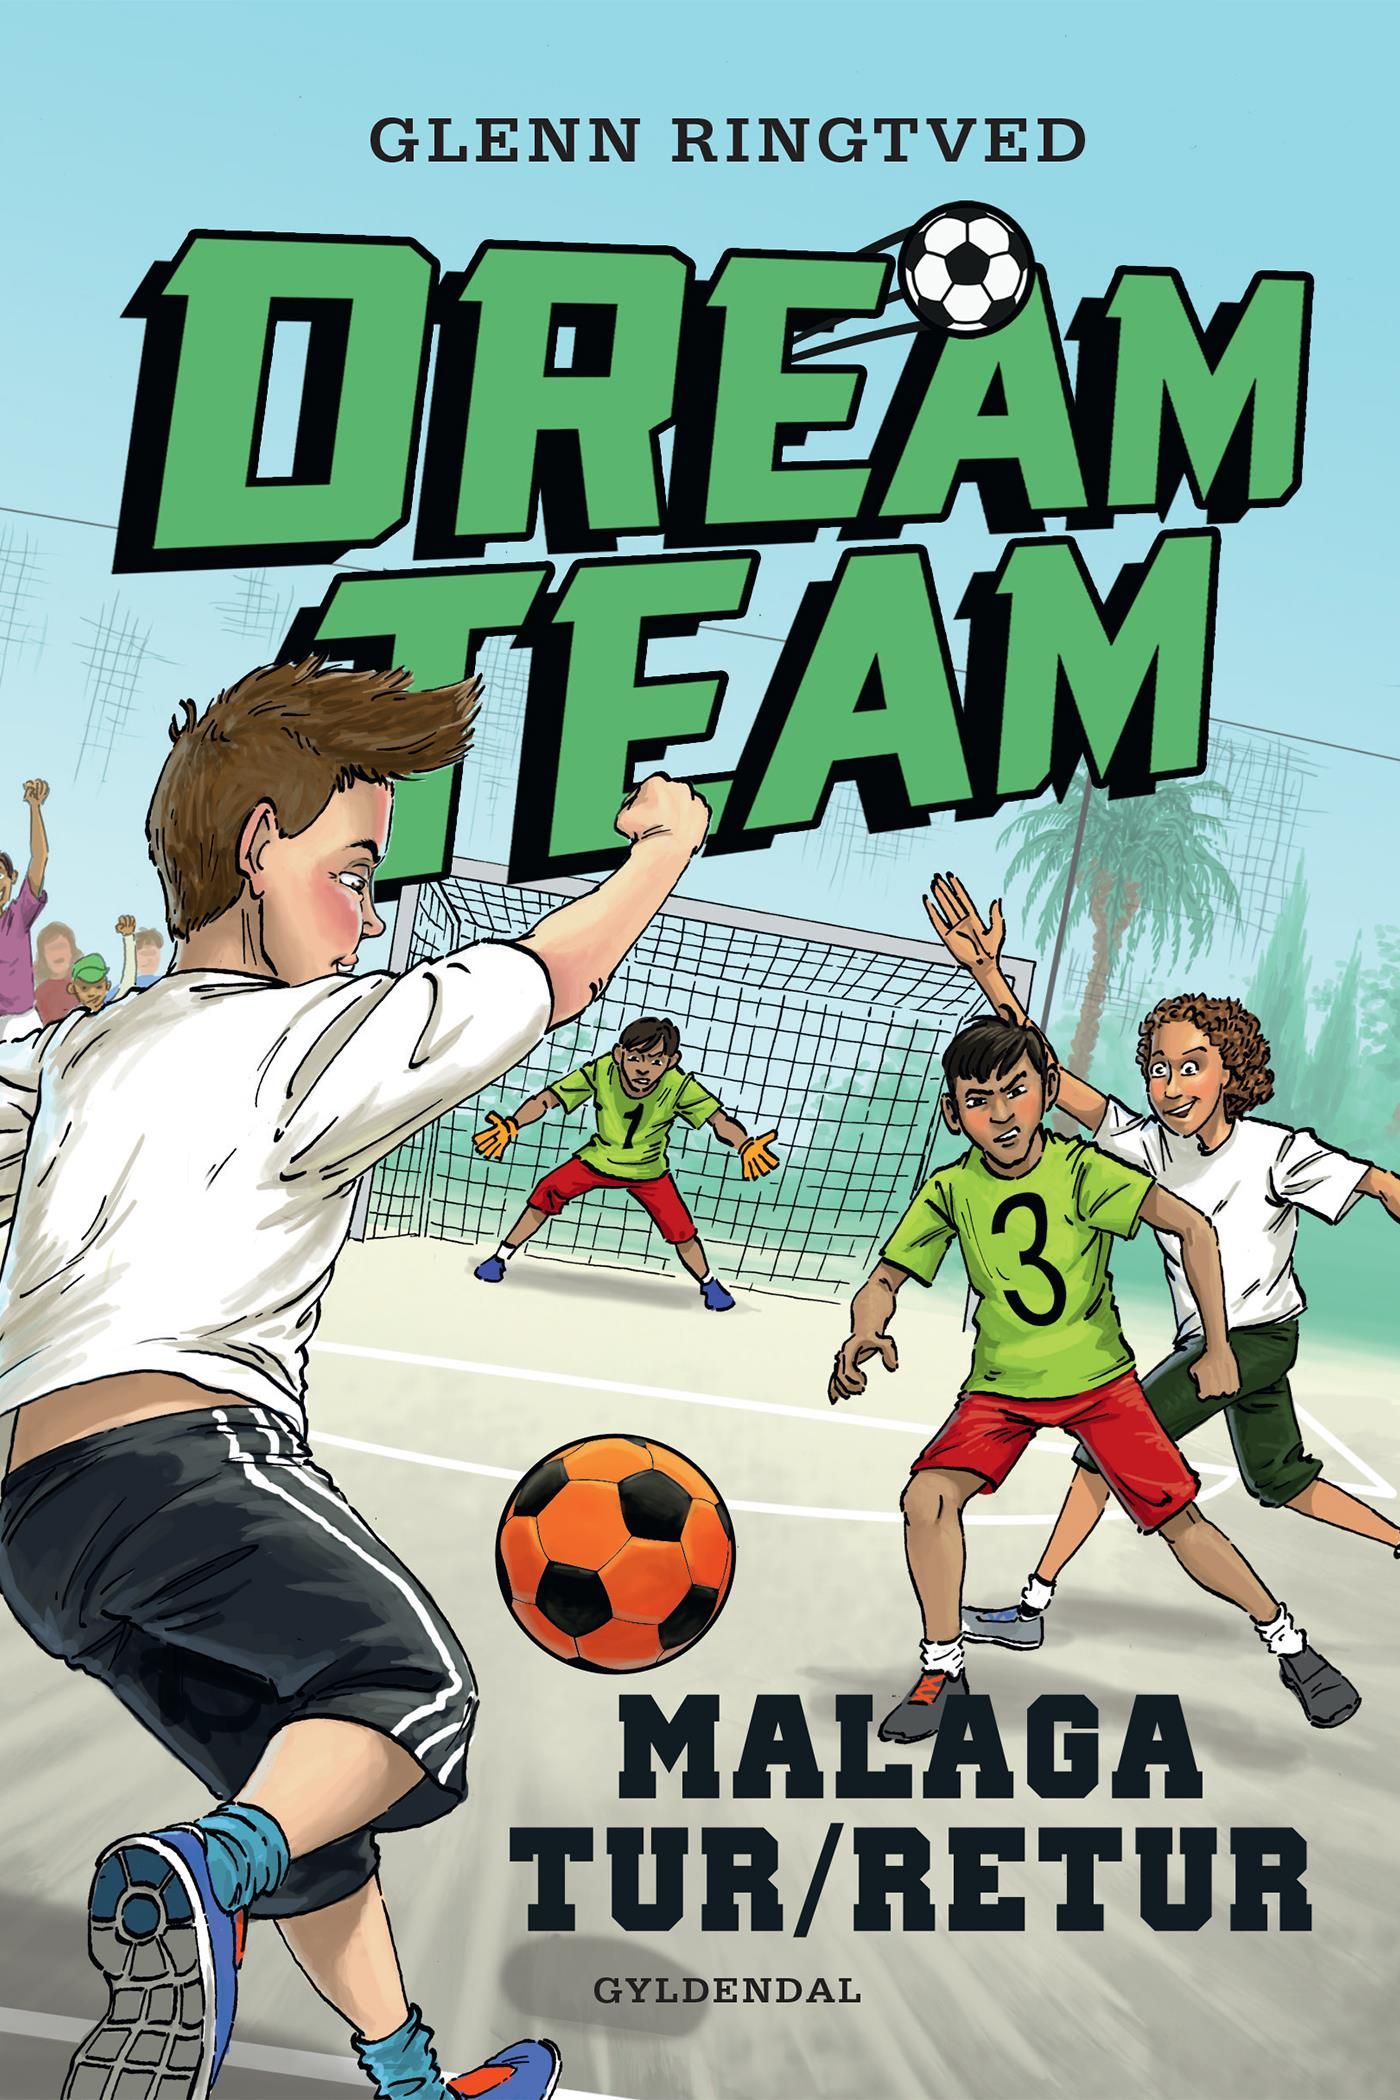 Dreamteam 5 - Malaga tur/retur, eBook by Glenn Ringtved